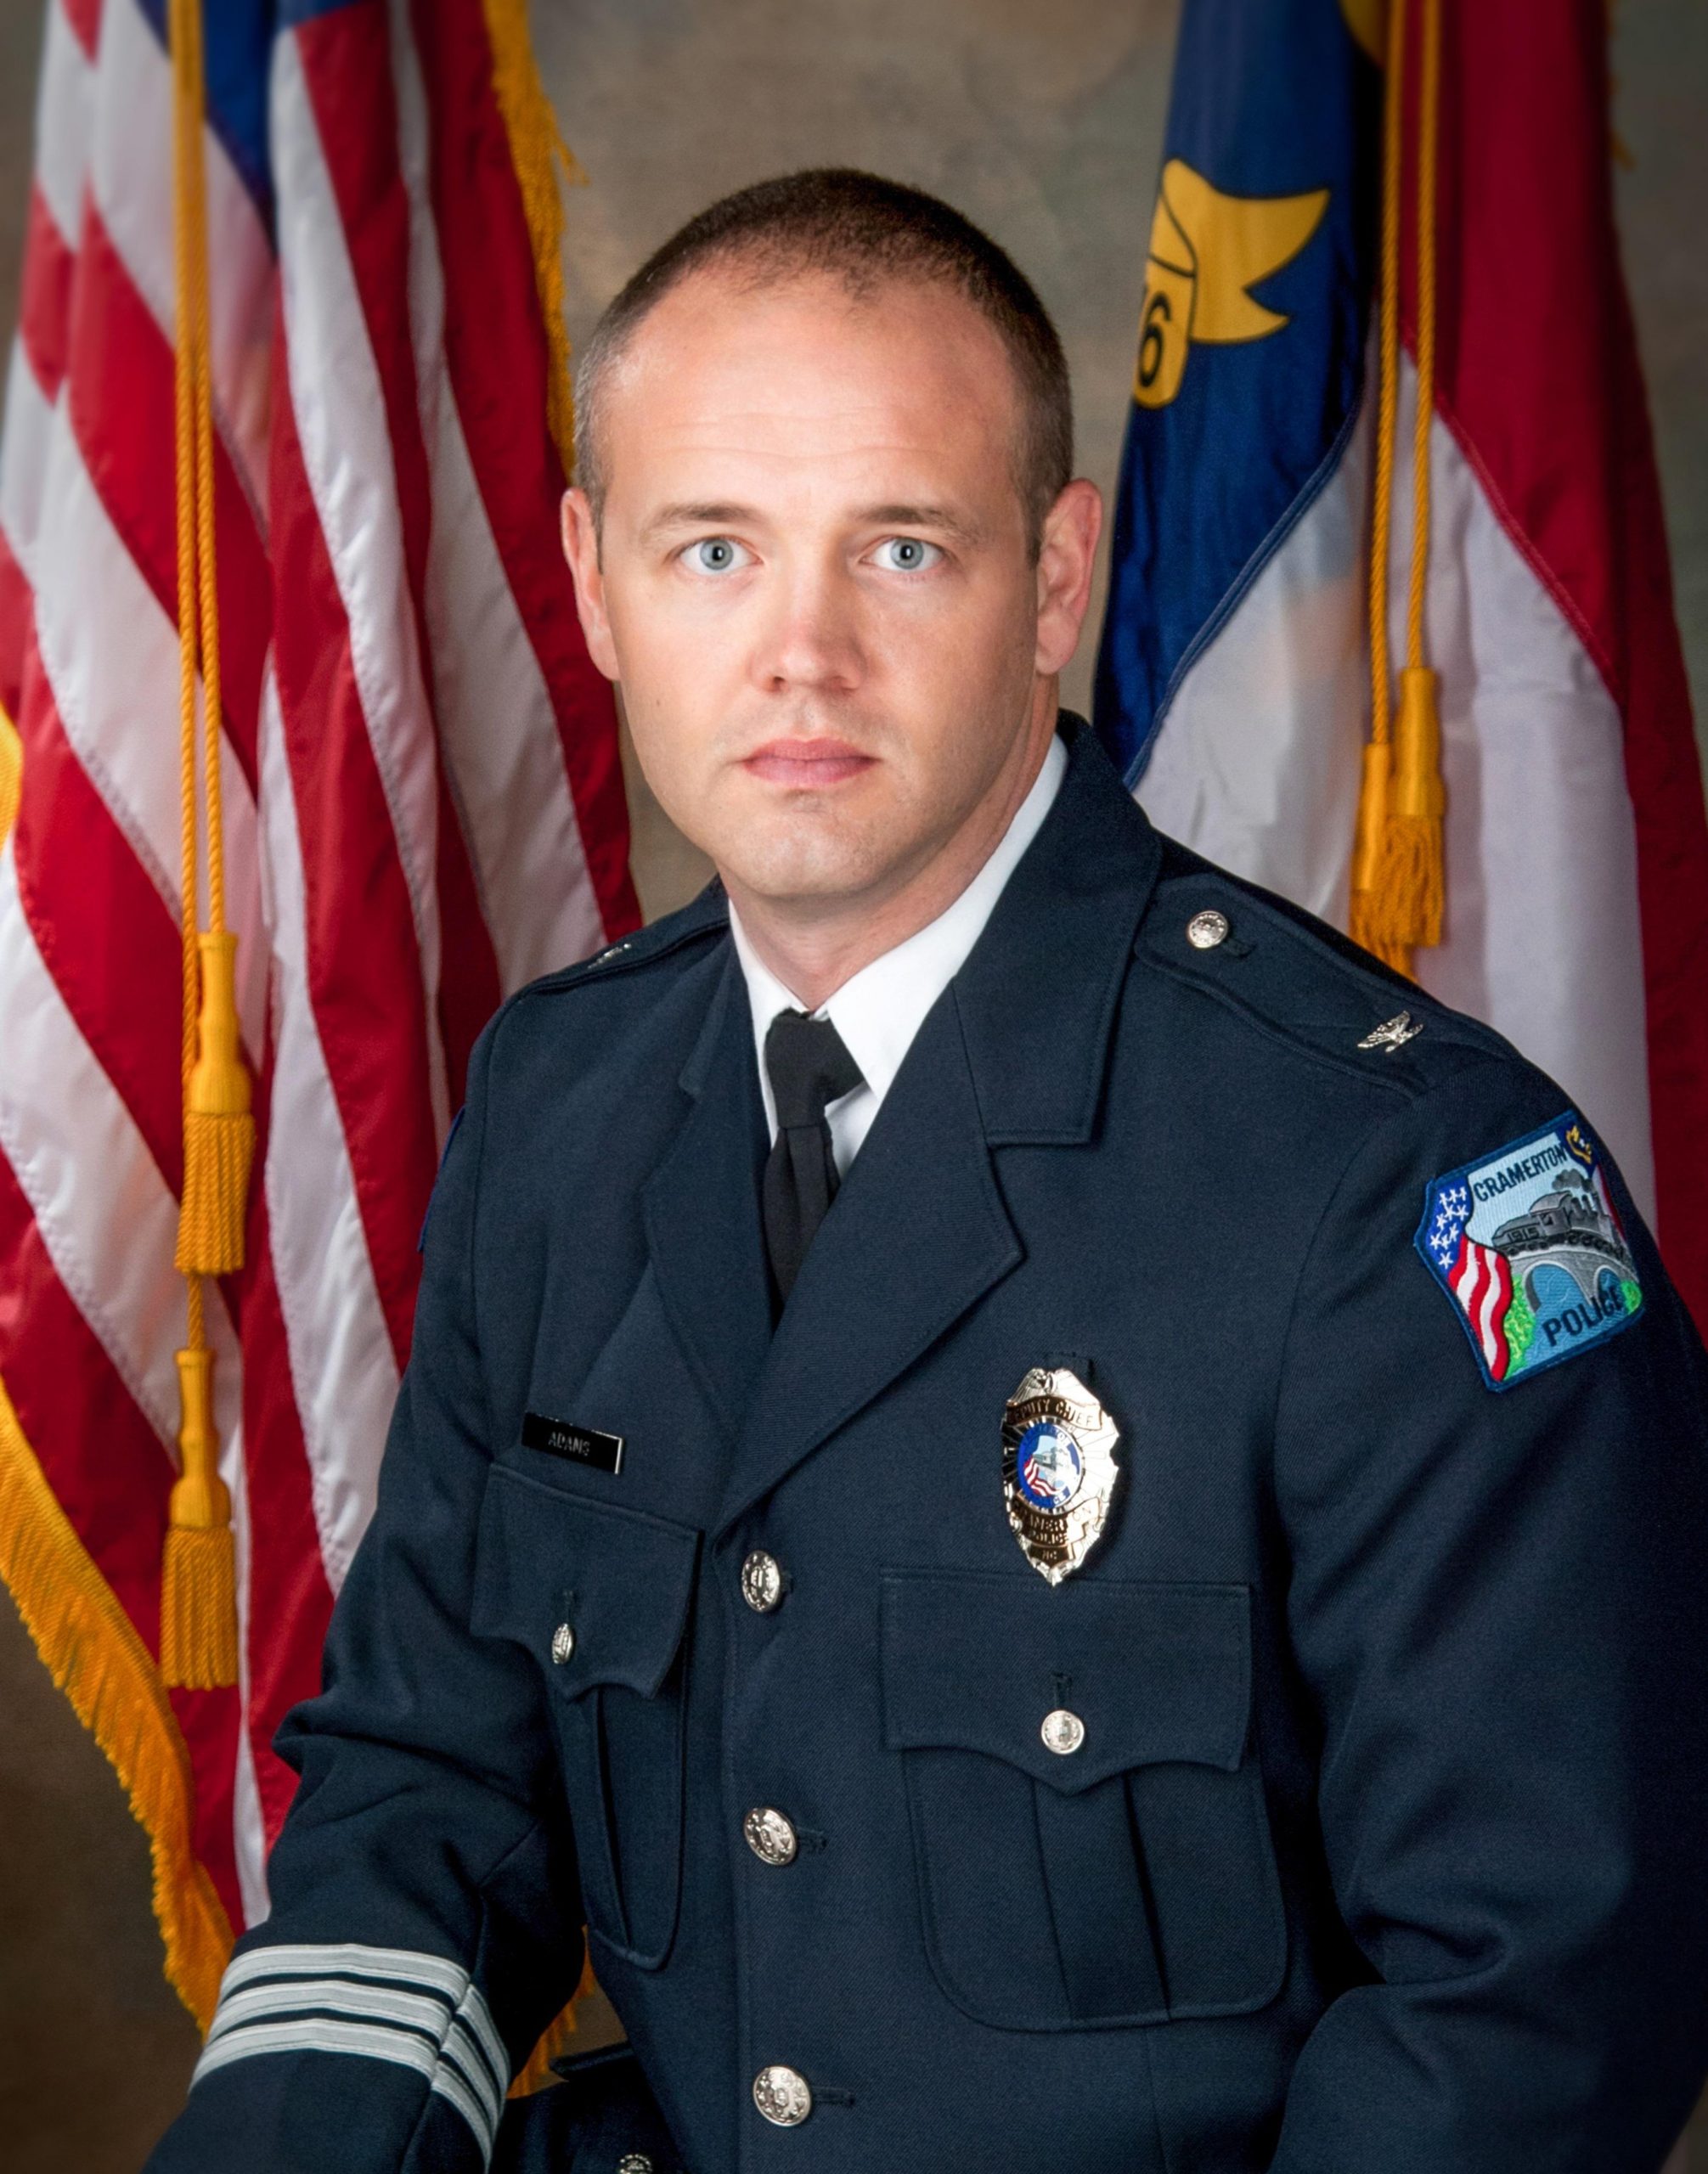 Cramerton hires new police chief